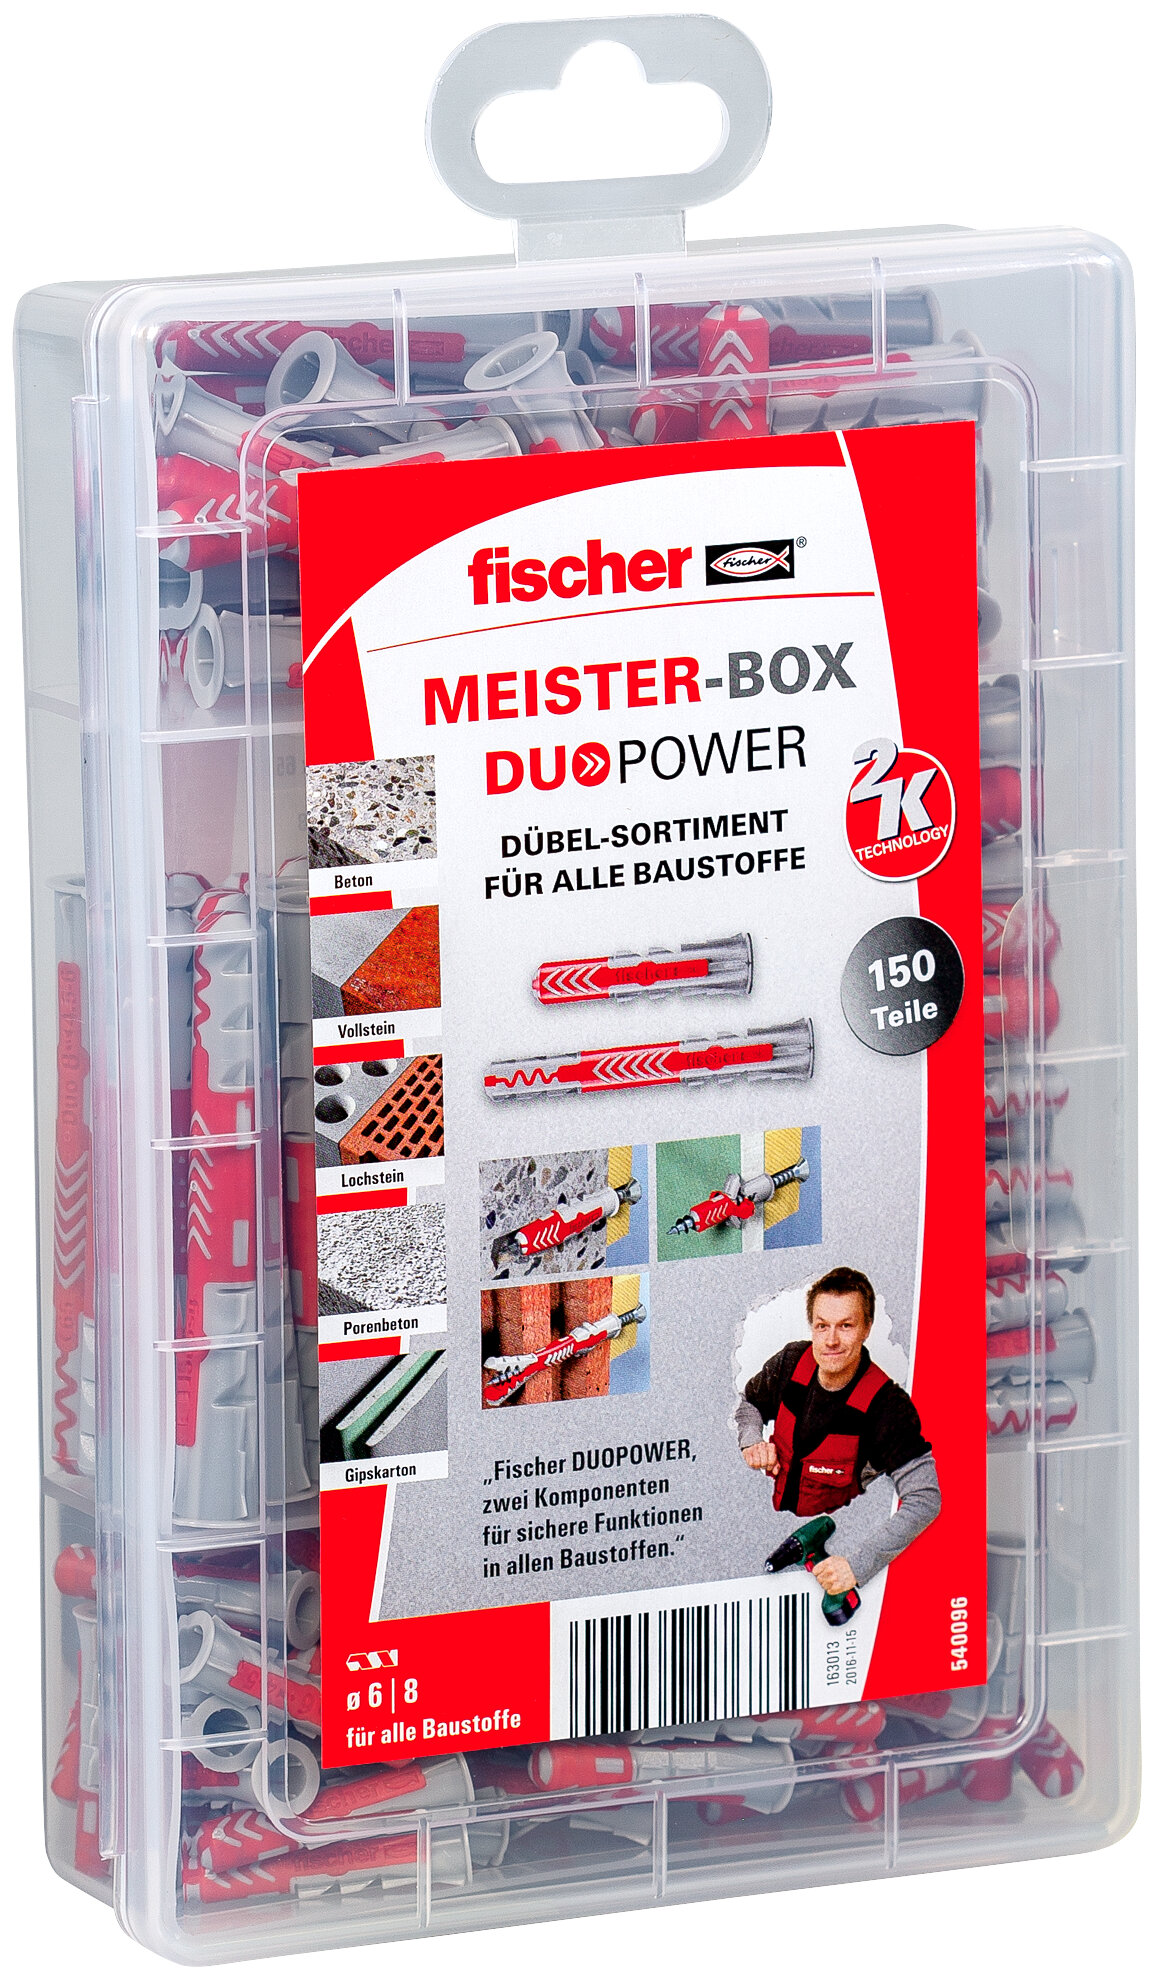 Meister-Box DUOPOWER kurz/lang